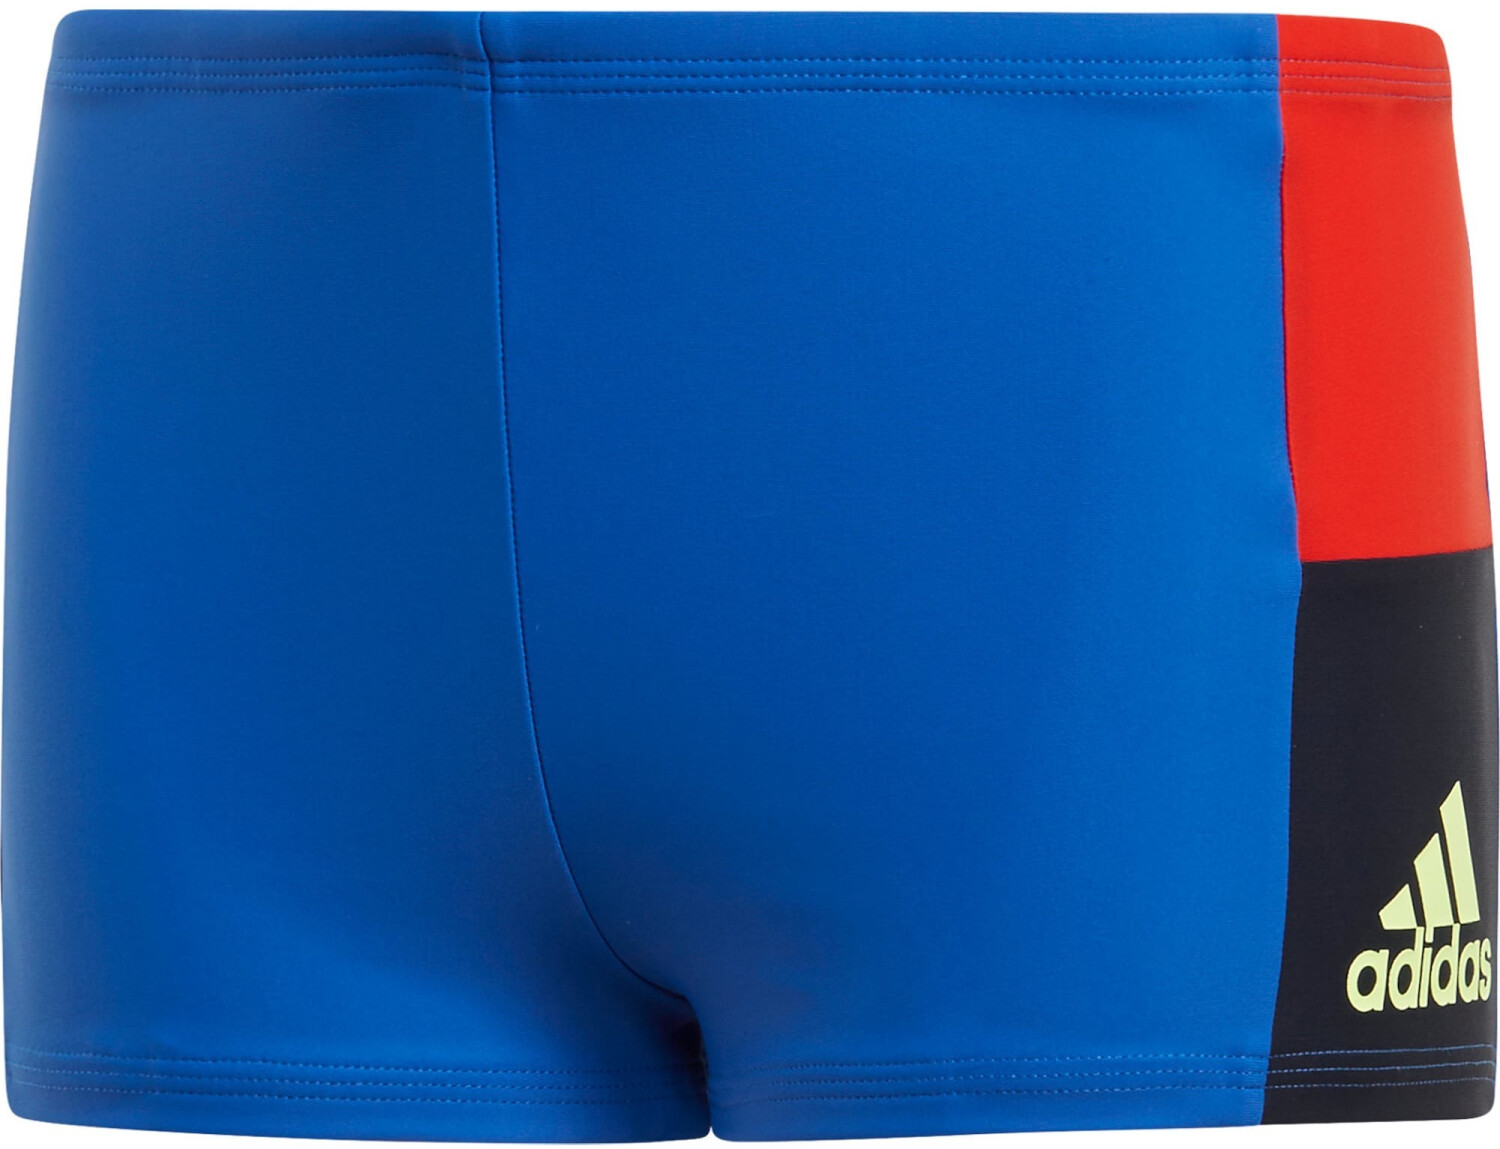 Adidas Performance Swim Shorts (DP7525) blue/red